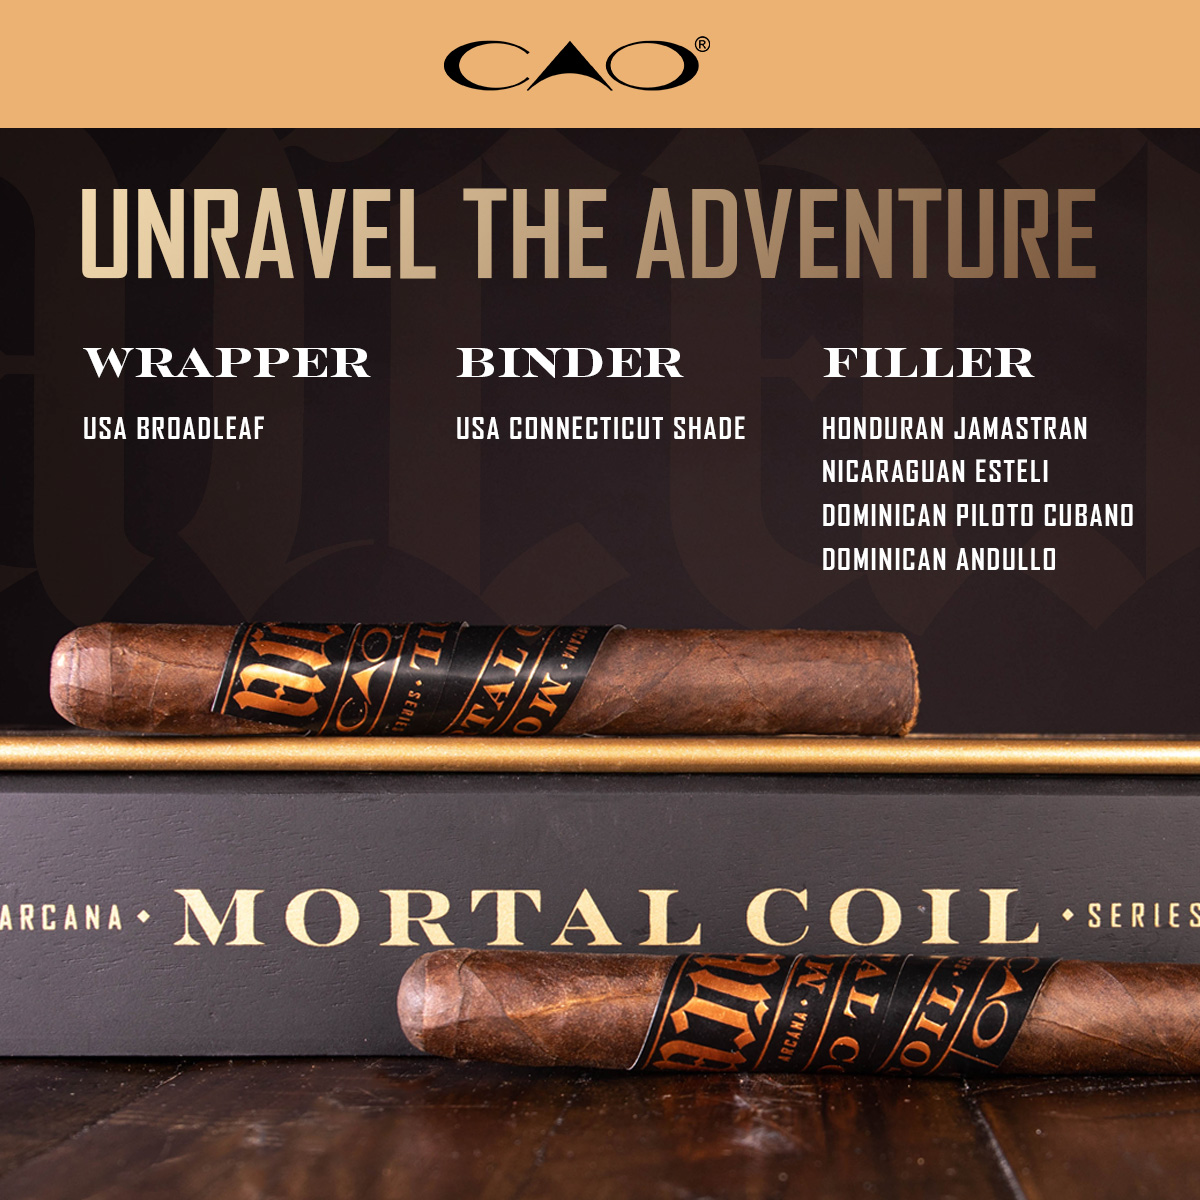 A cigar with a complex flavor profile